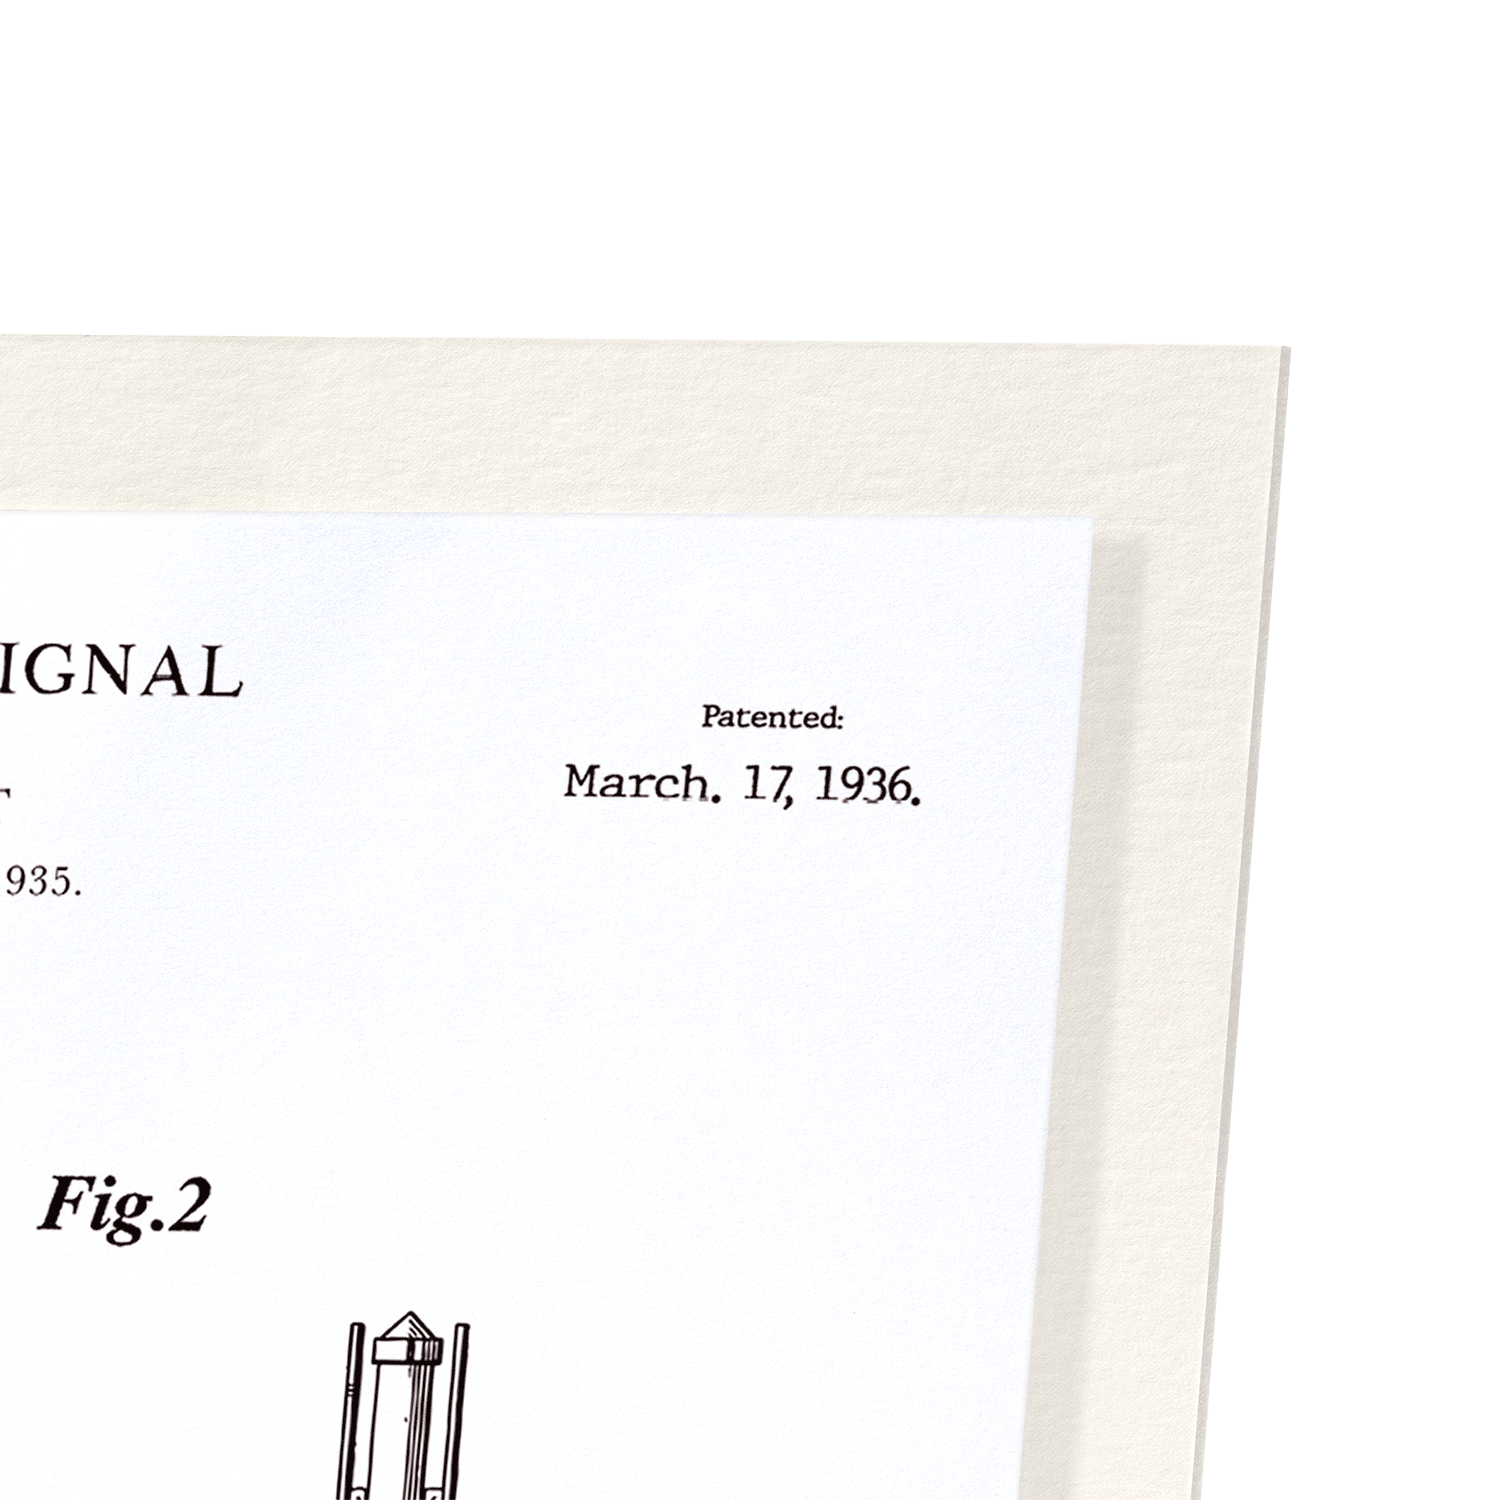 PATENT OF TRAFFIC SIGNAL (1936): Patent Art Print